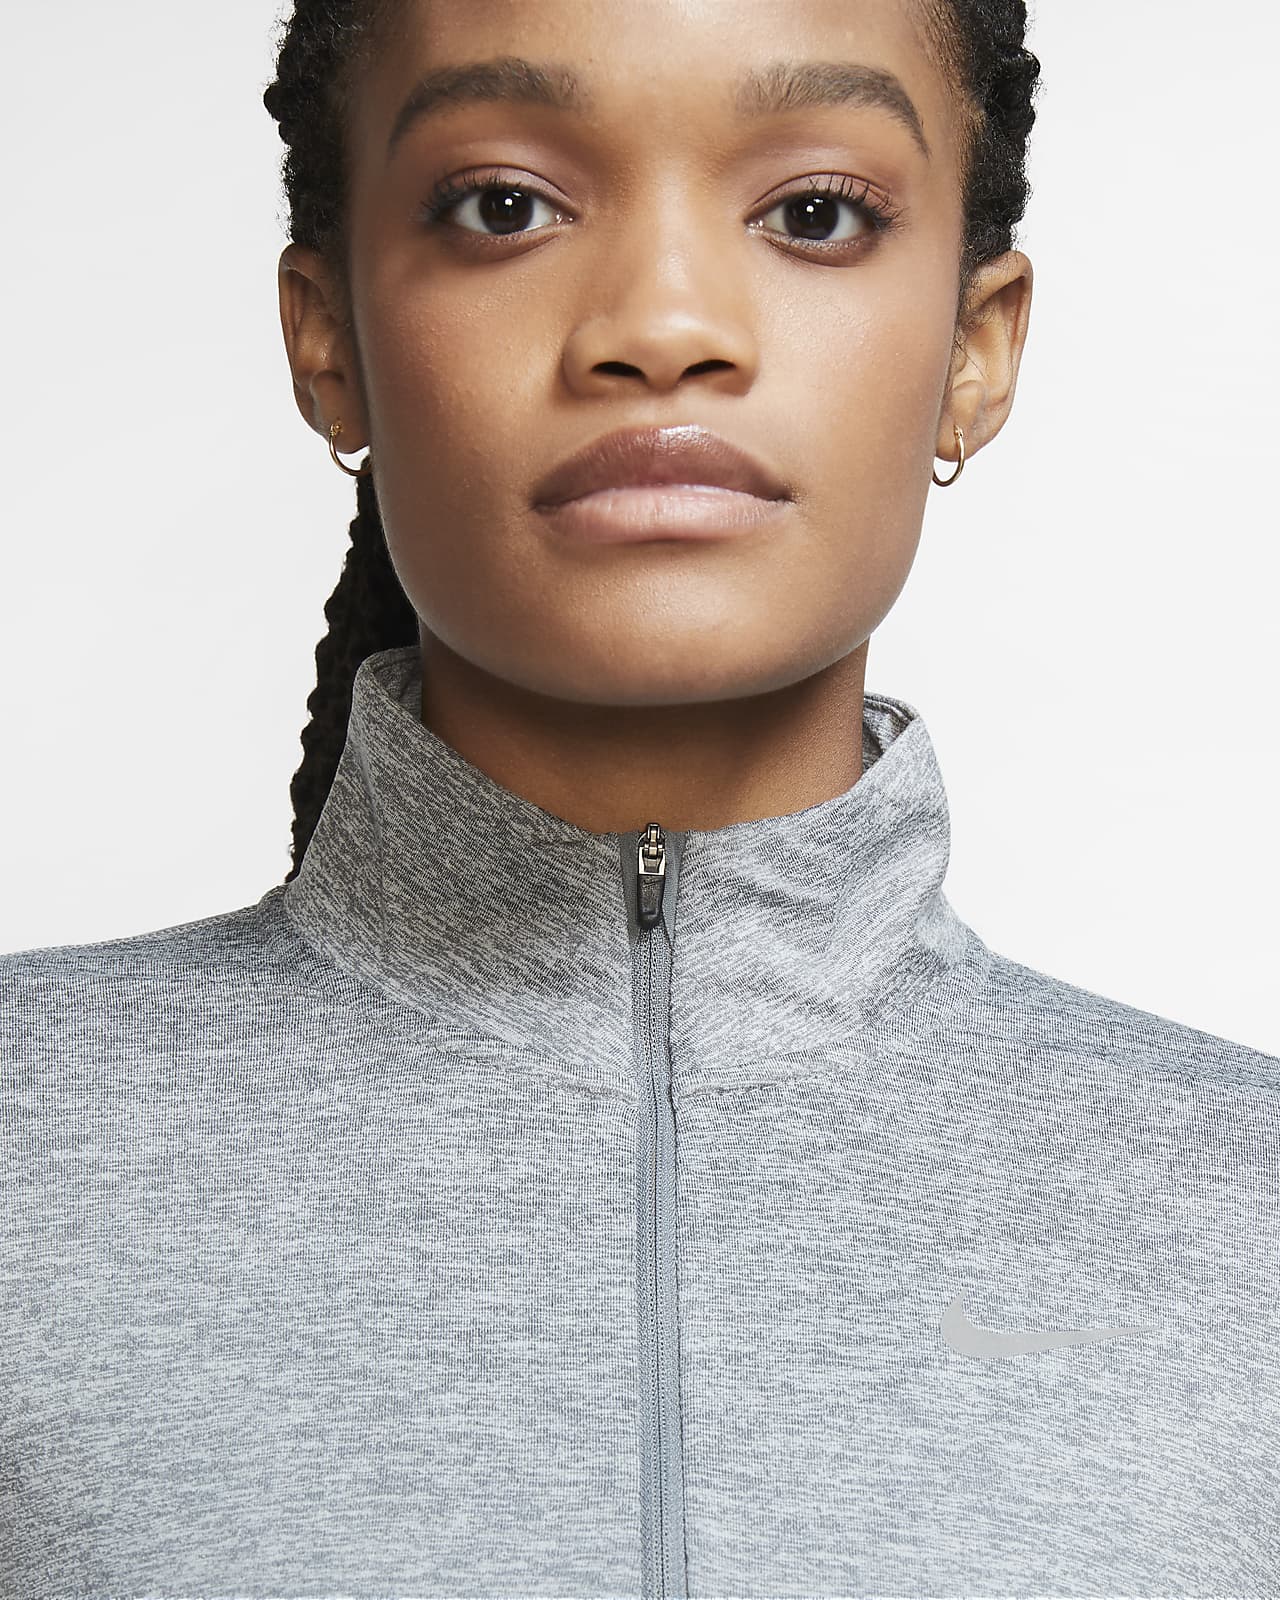 Nike Womens Element Half Zip Top - Black